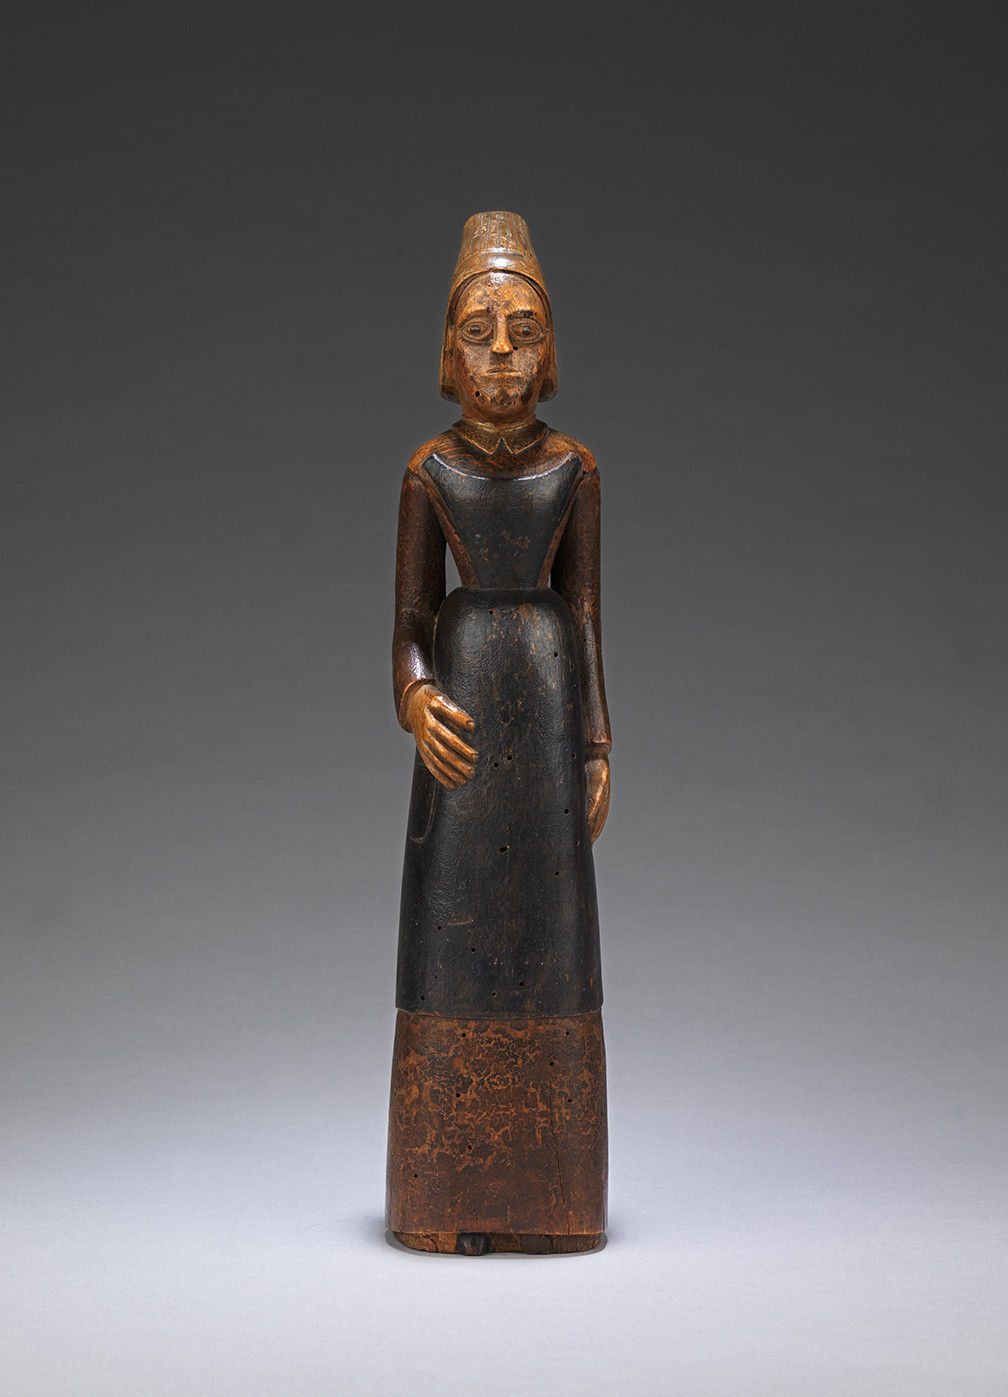 Standing Primitive Folk Art Figure of a Lady